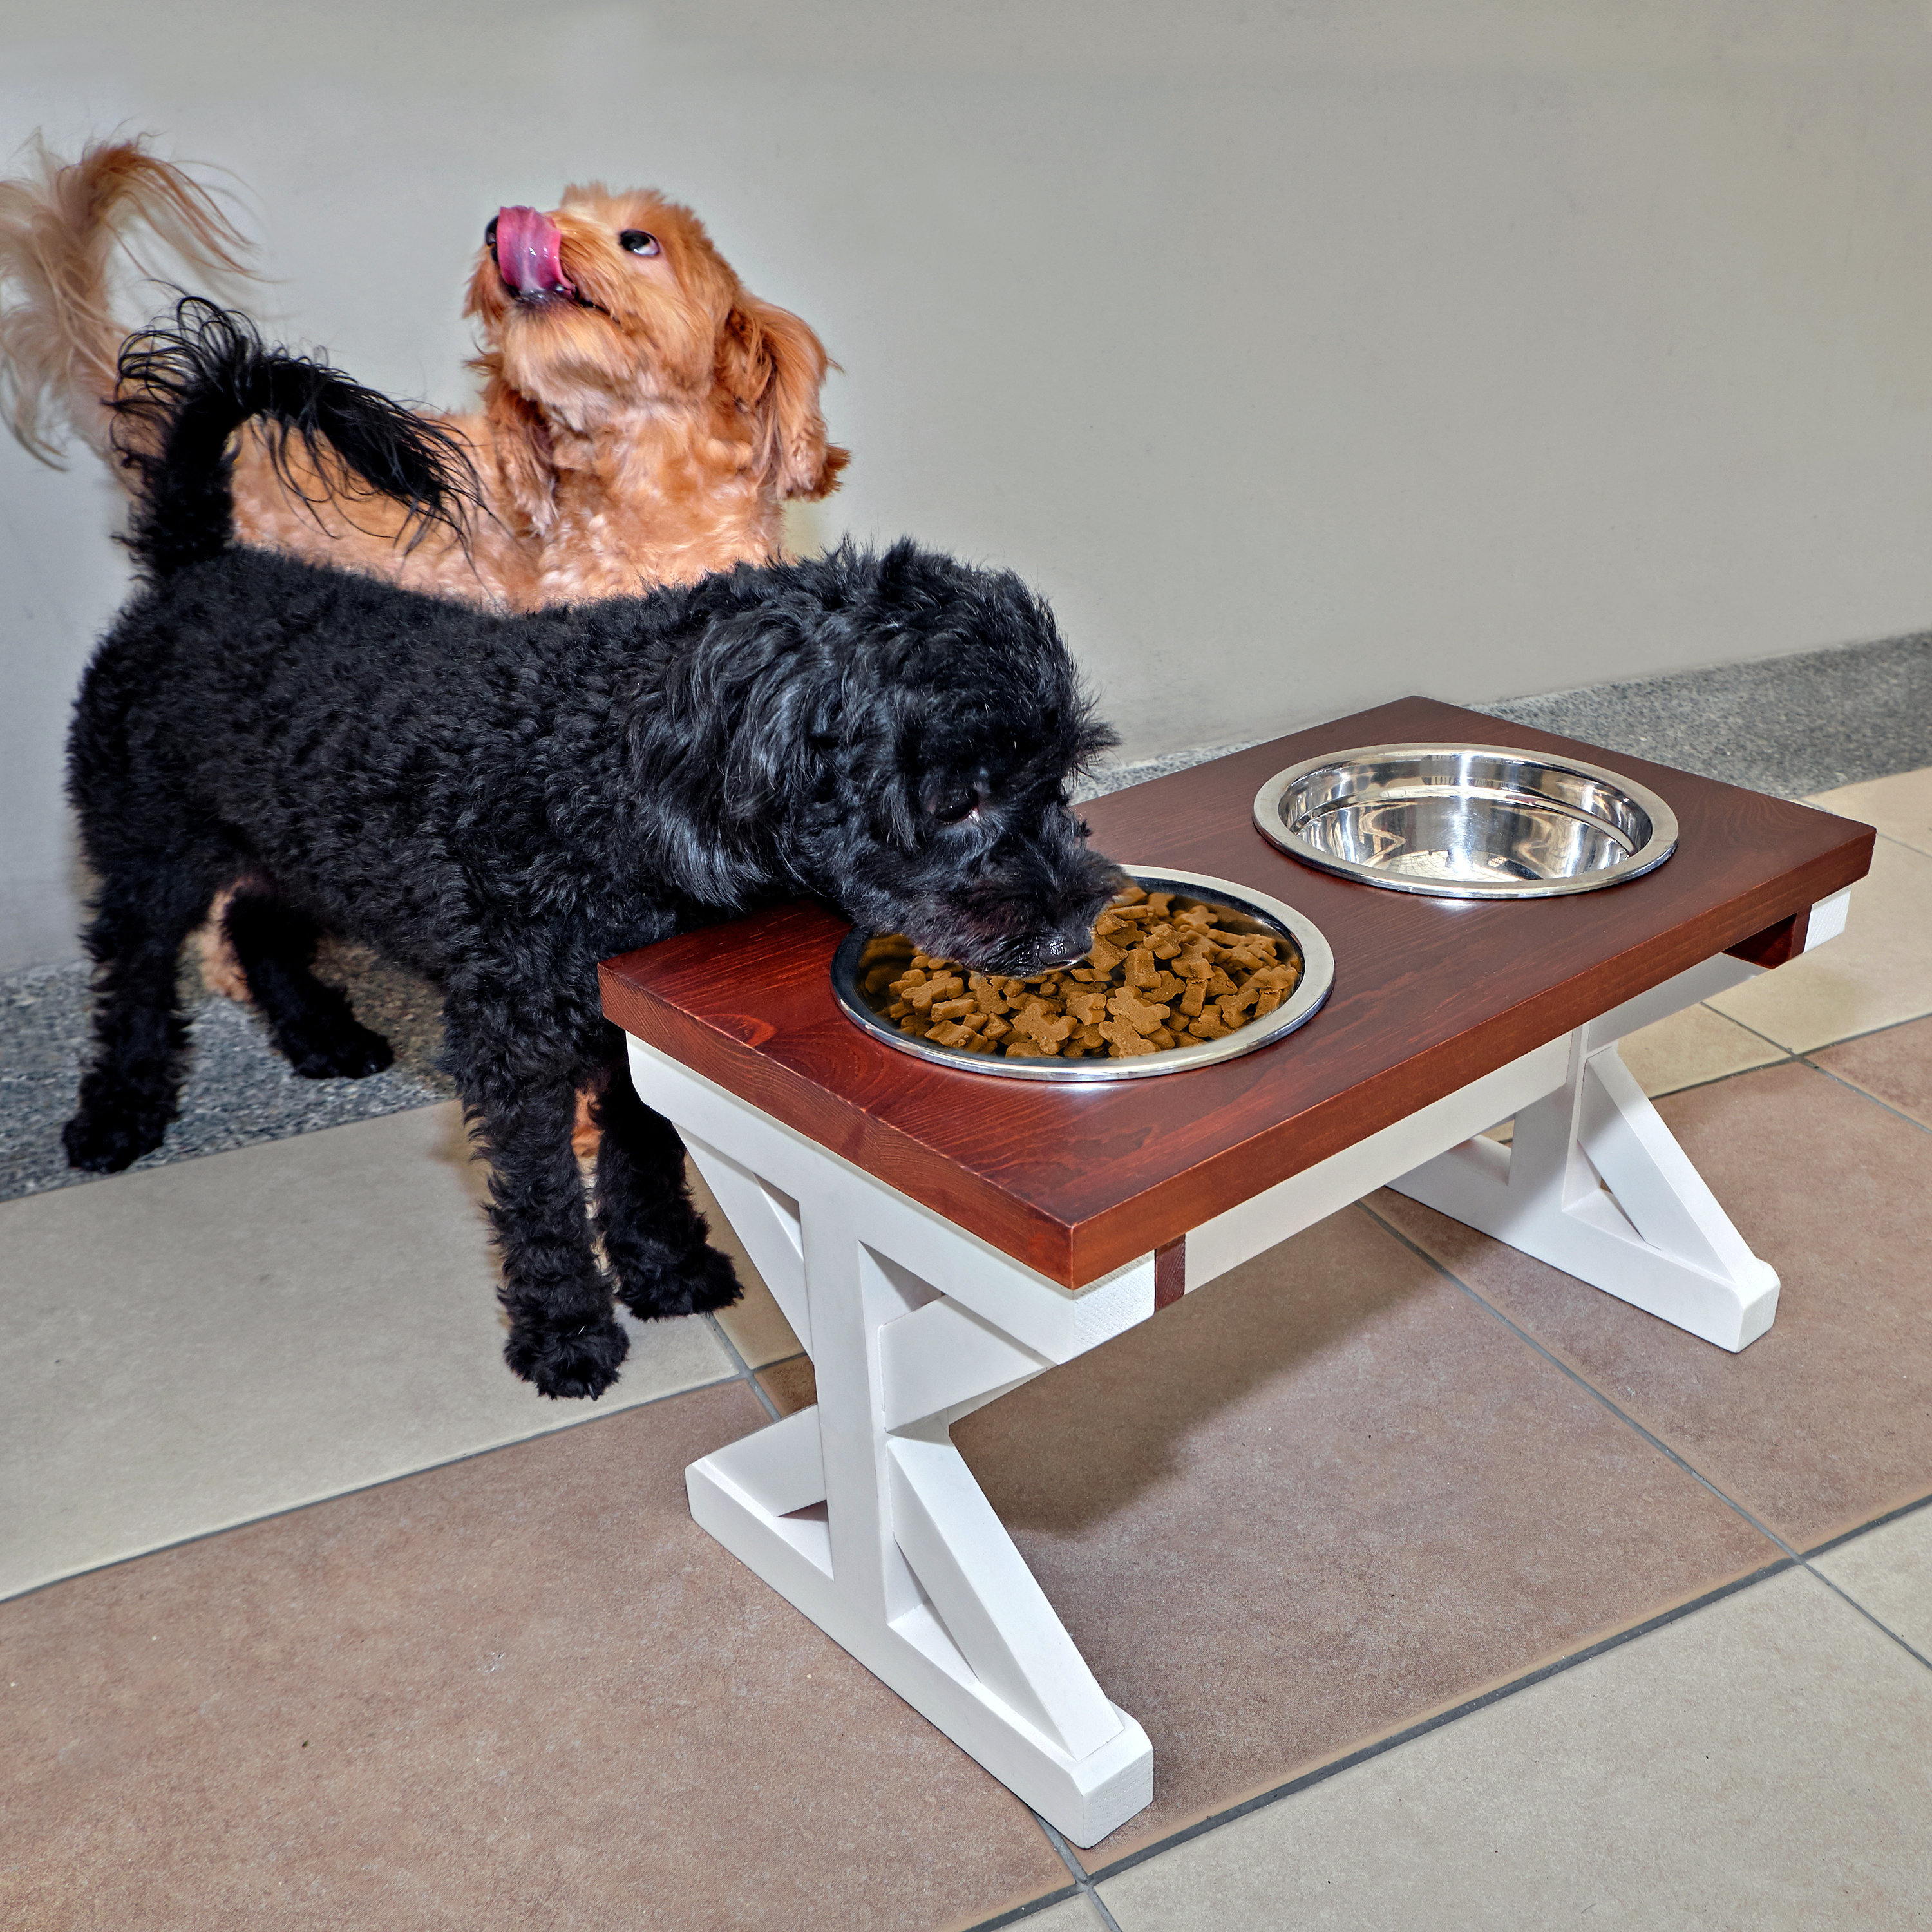 Veehoo Adjustable Elevated Dog Bowls, Pet Supplies